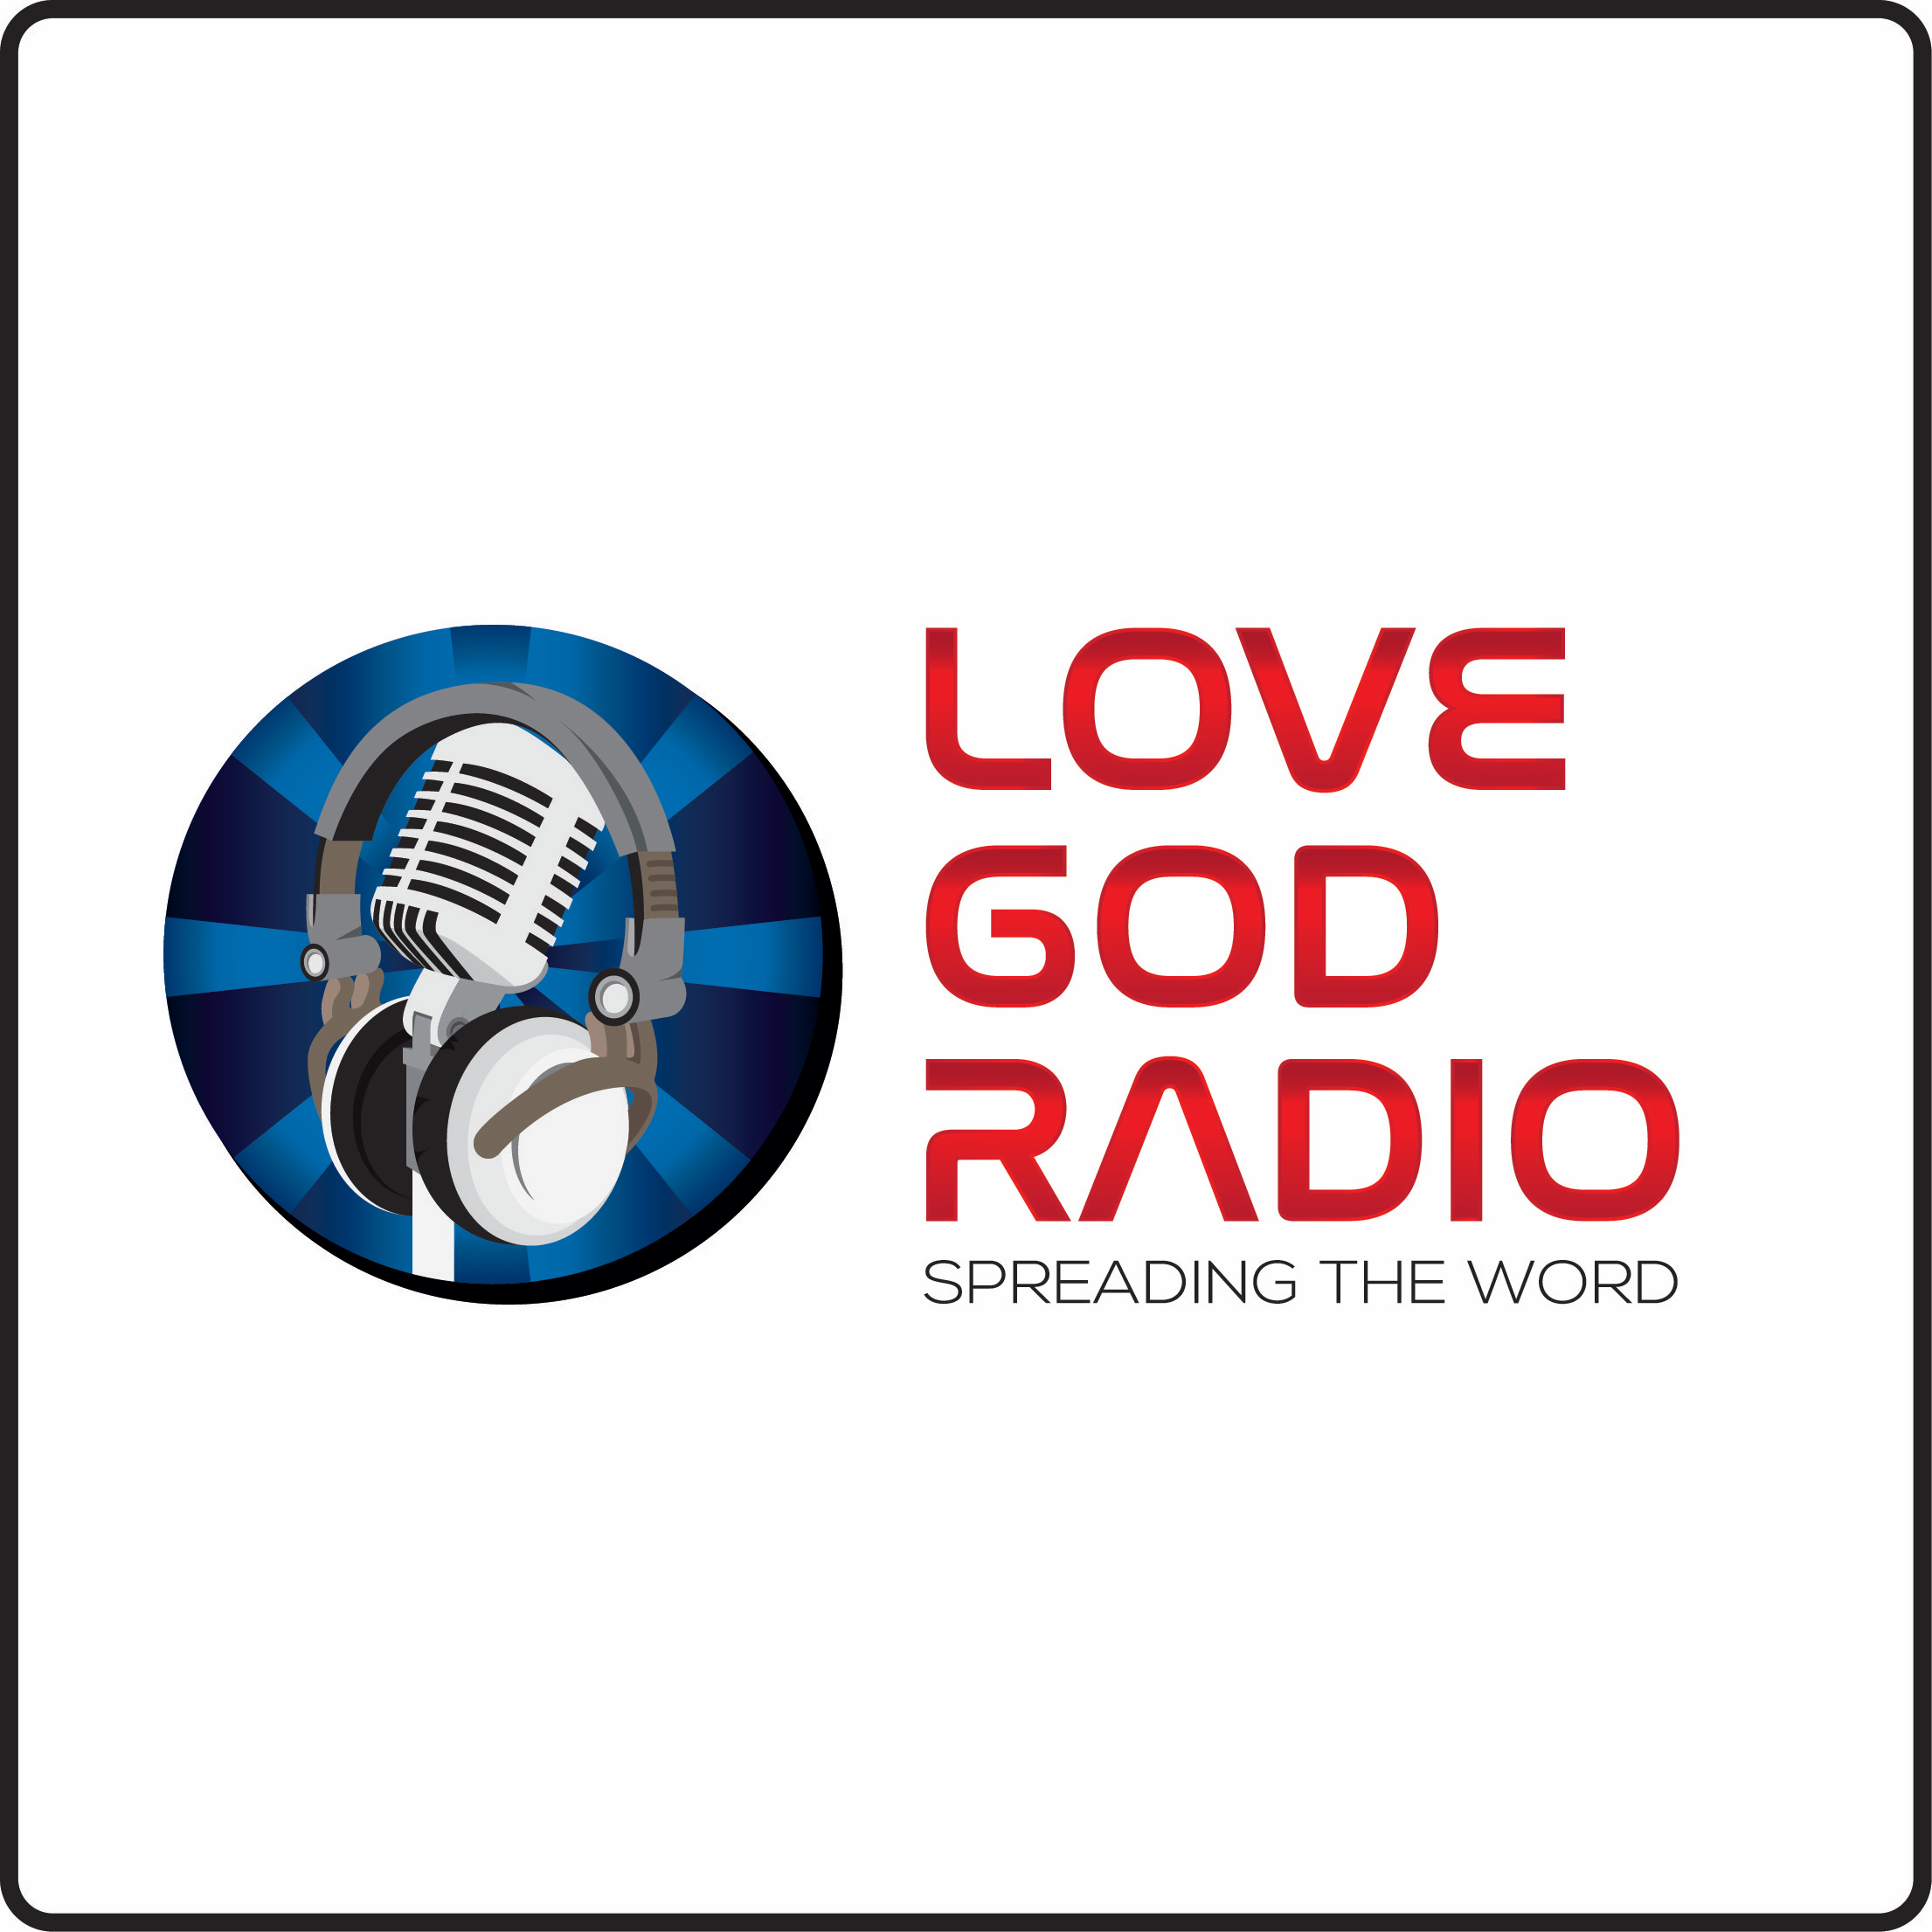 LOVE GOD RADIO